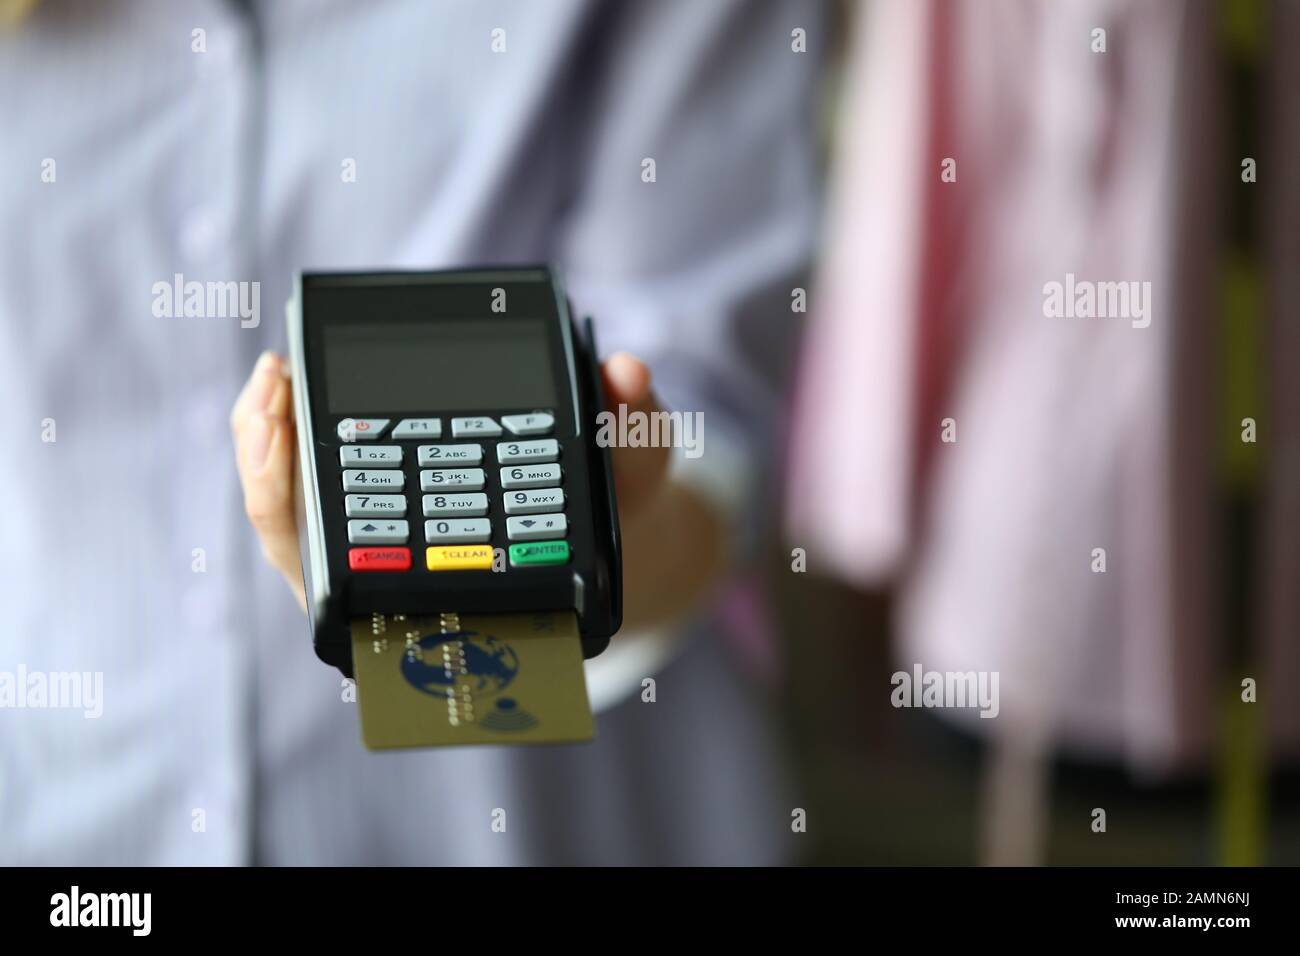 Frau hält POS-Termial mit Goldplastik-Debitkarte in der Hand Stockfoto